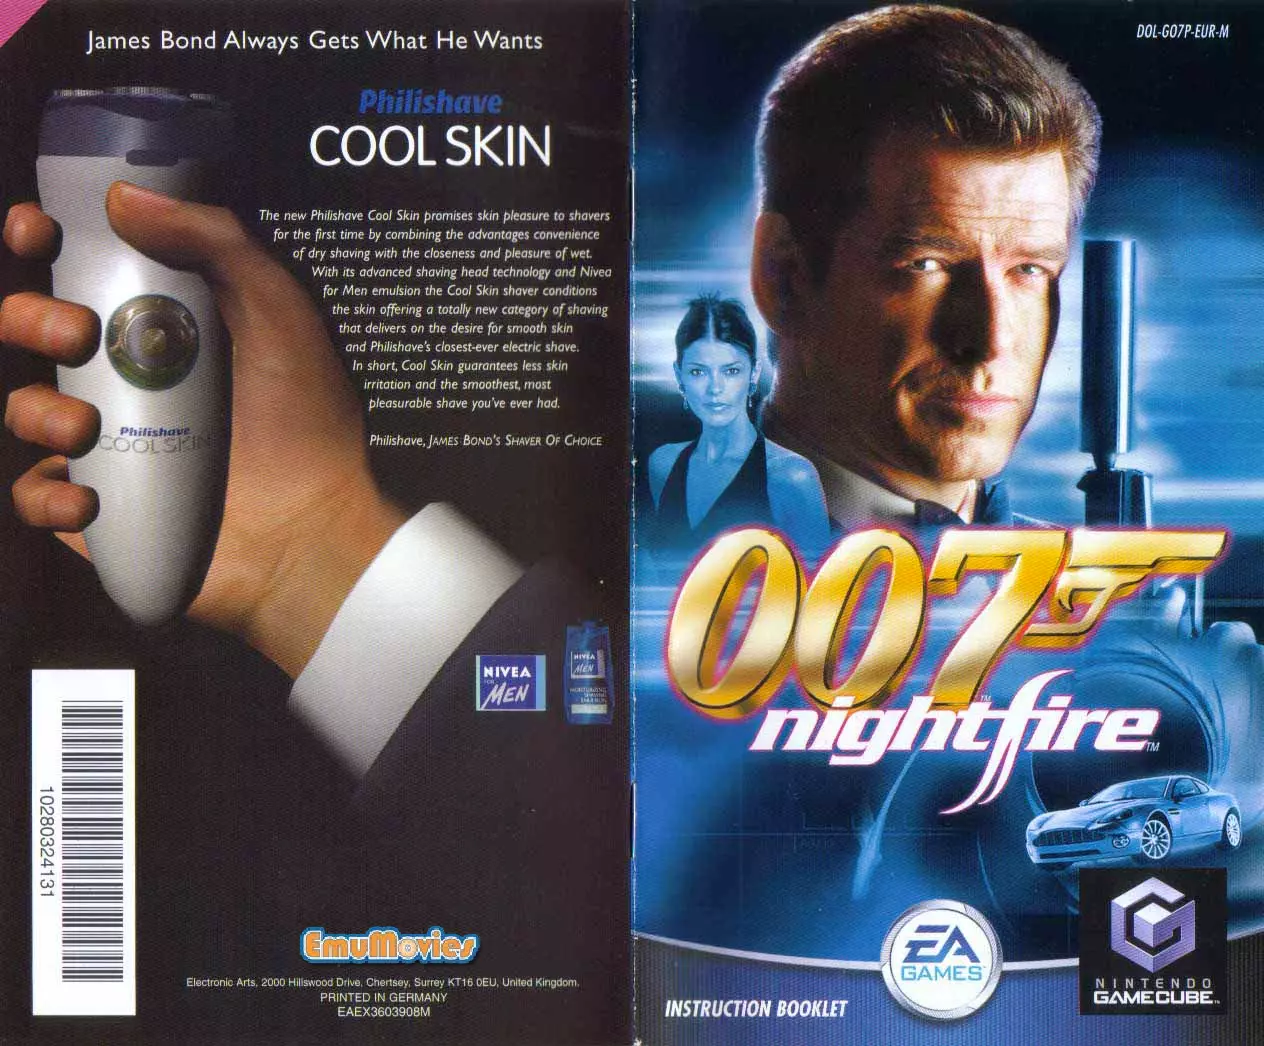 manual for 007 - NightFire